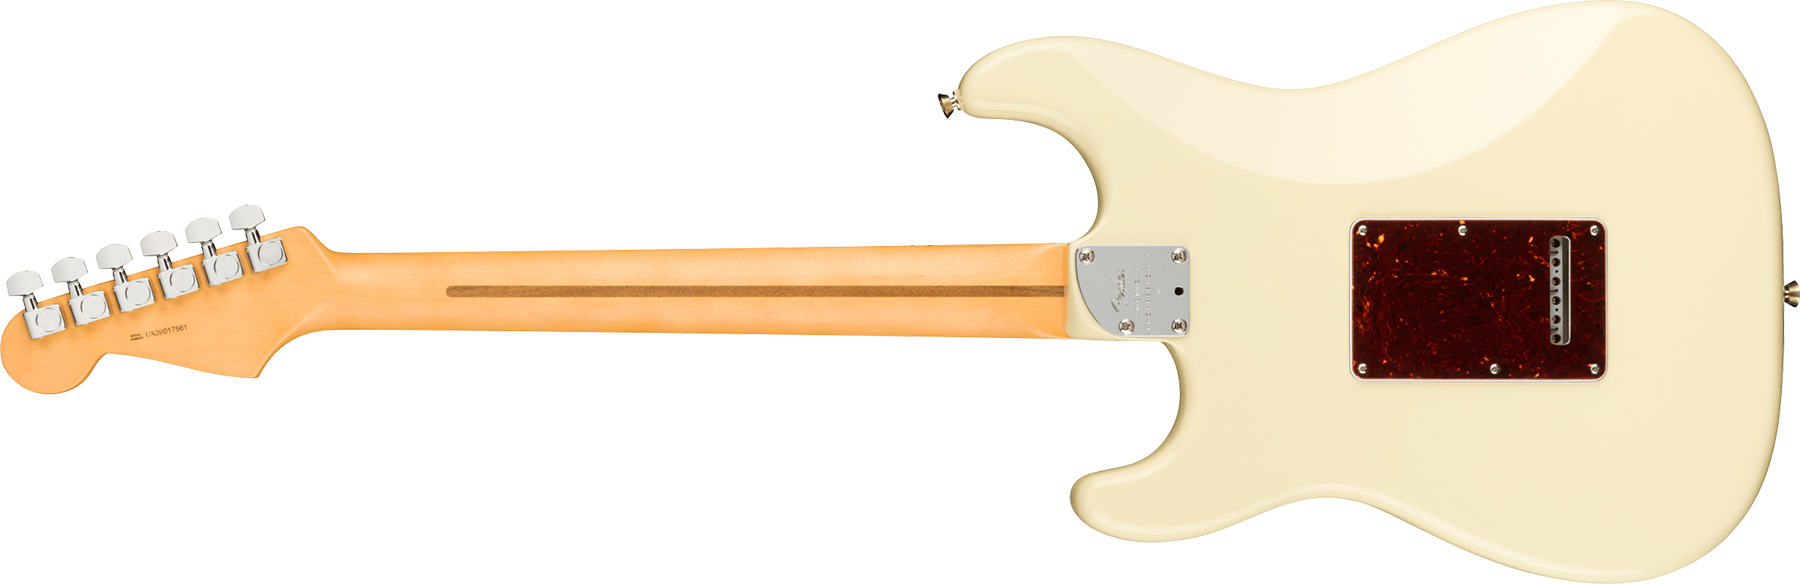 Fender Strat American Professional Ii Hss Usa Mn - Olympic White - Str shape electric guitar - Variation 1